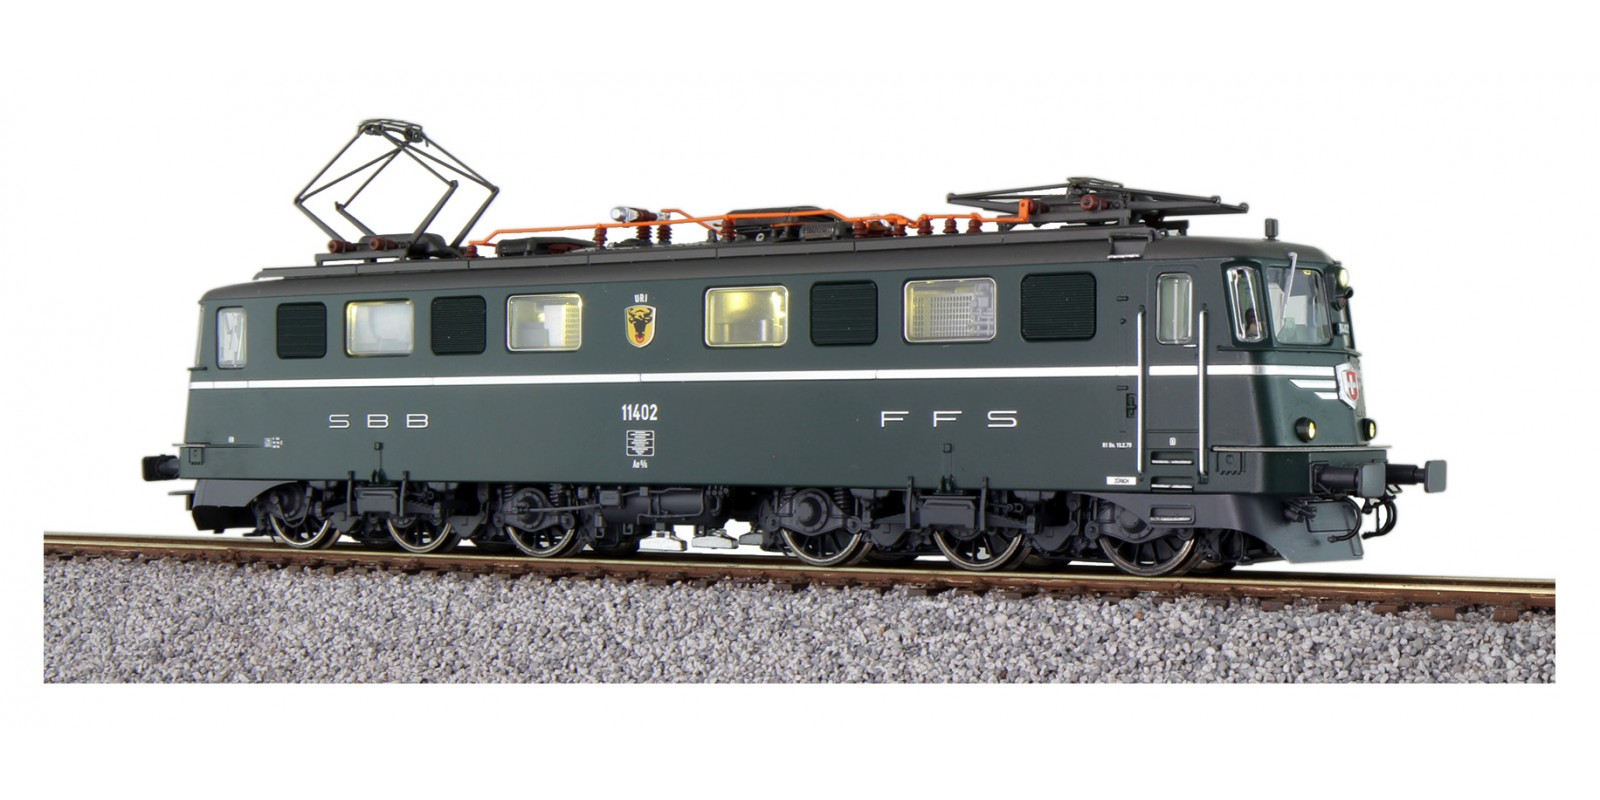 ES51530  Gauge H0 Electric locomotive AE6/6, 11402 "Uri" of the SBB, era IV with sound